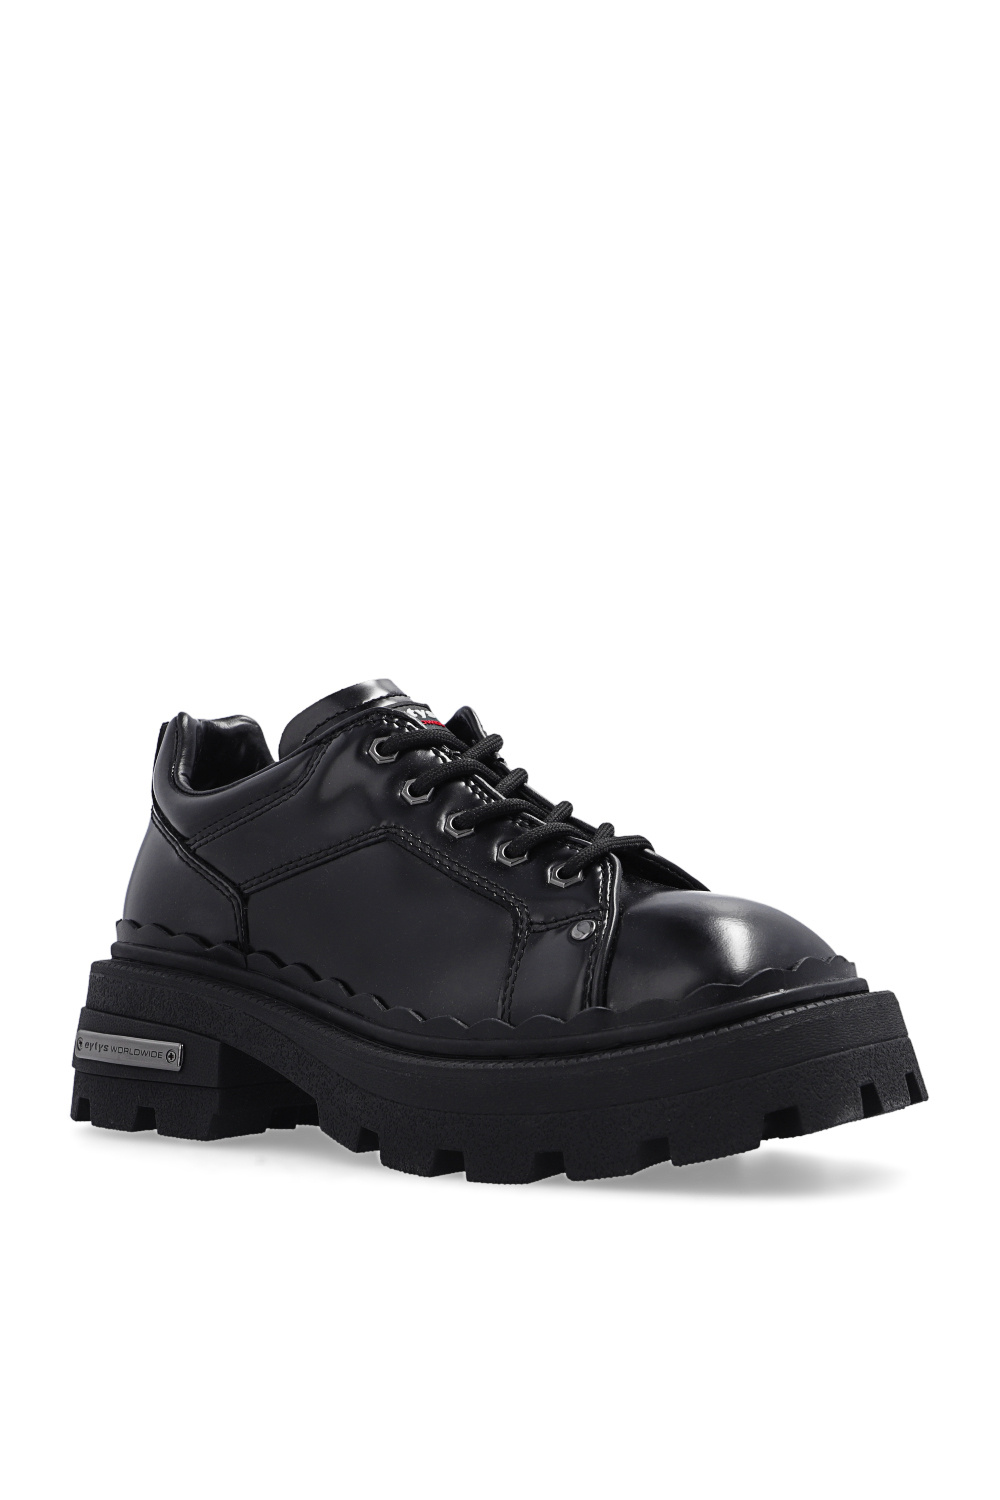 Detroit' chunky sole spessa shoes Eytys - IetpShops Croatia - Nike